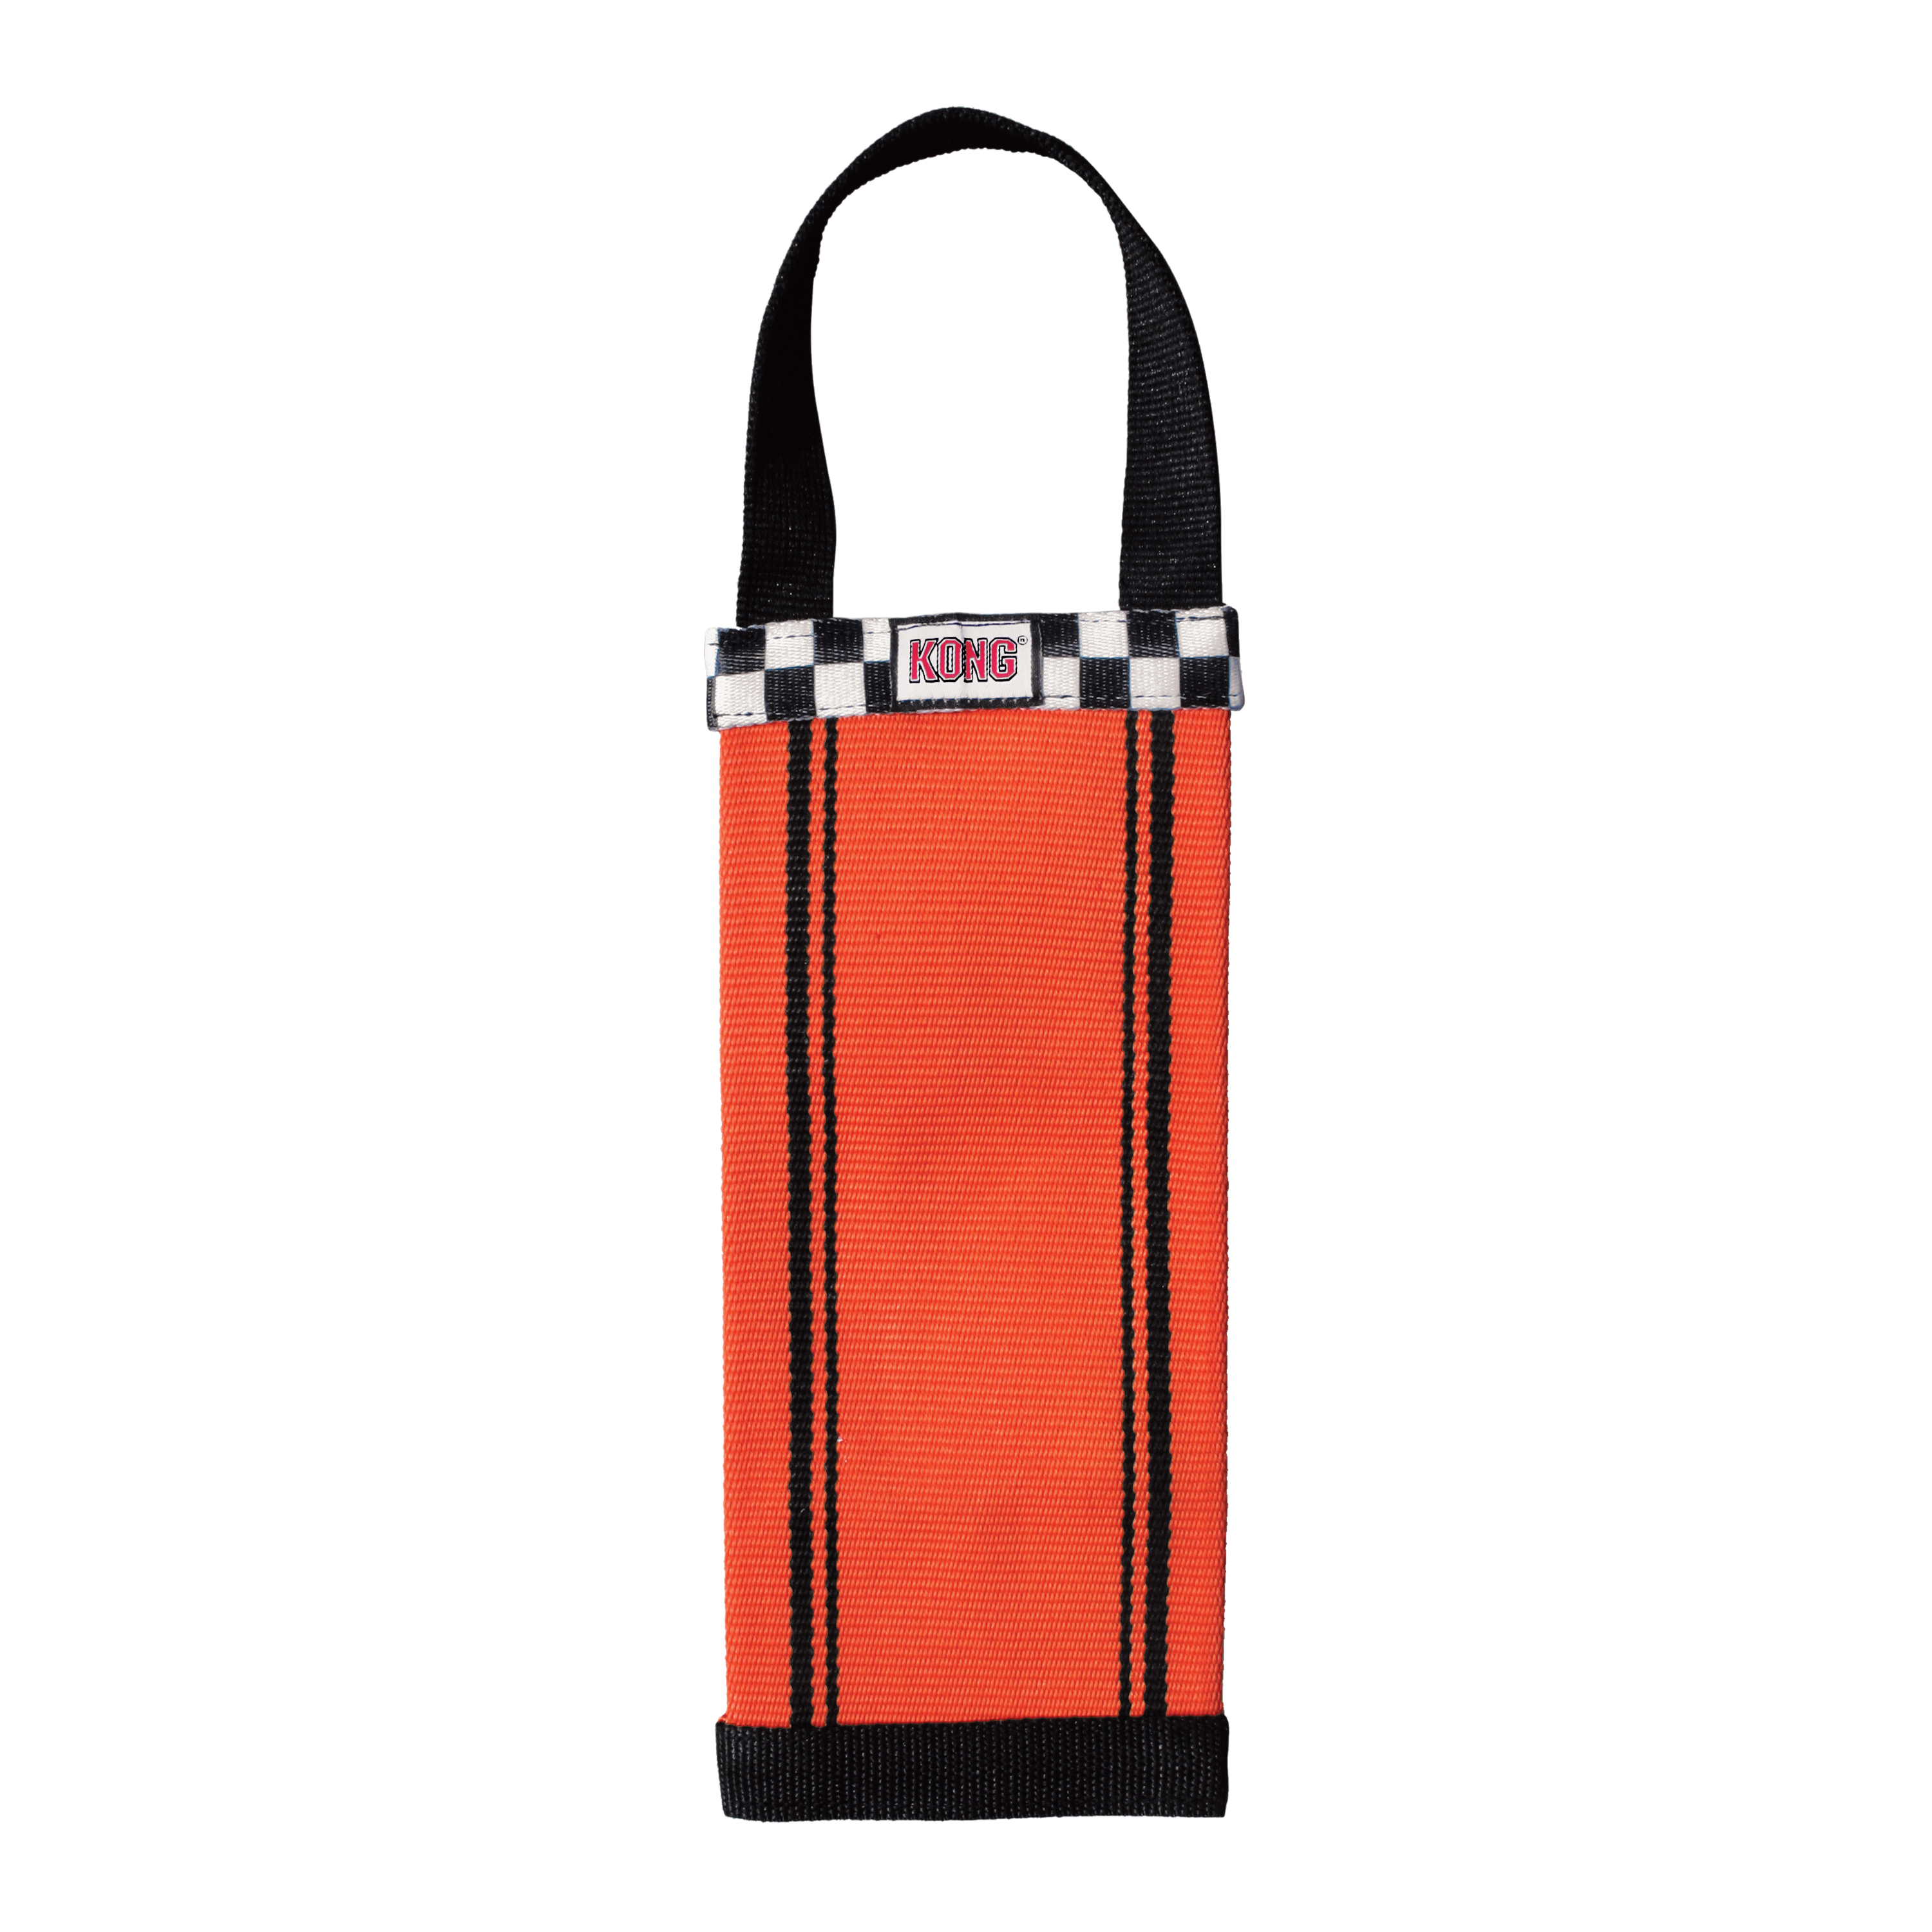 Ballistic Fire Hose Bottle Tracker offpack product image